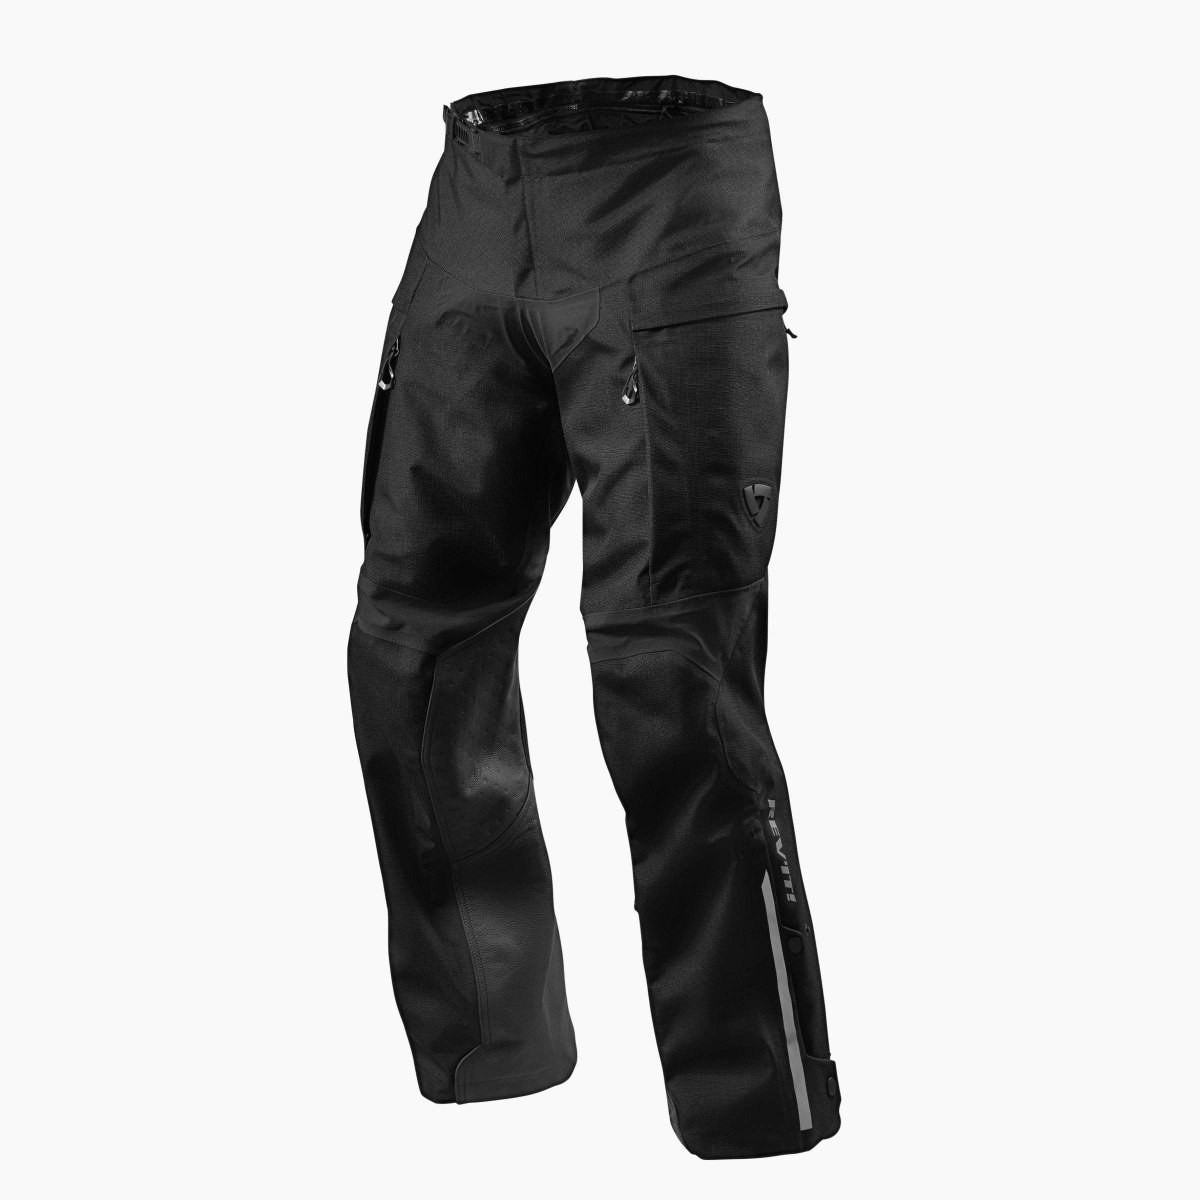 Image of REV'IT! Component H2O Short Black Motorcycle Pants Size XL EN